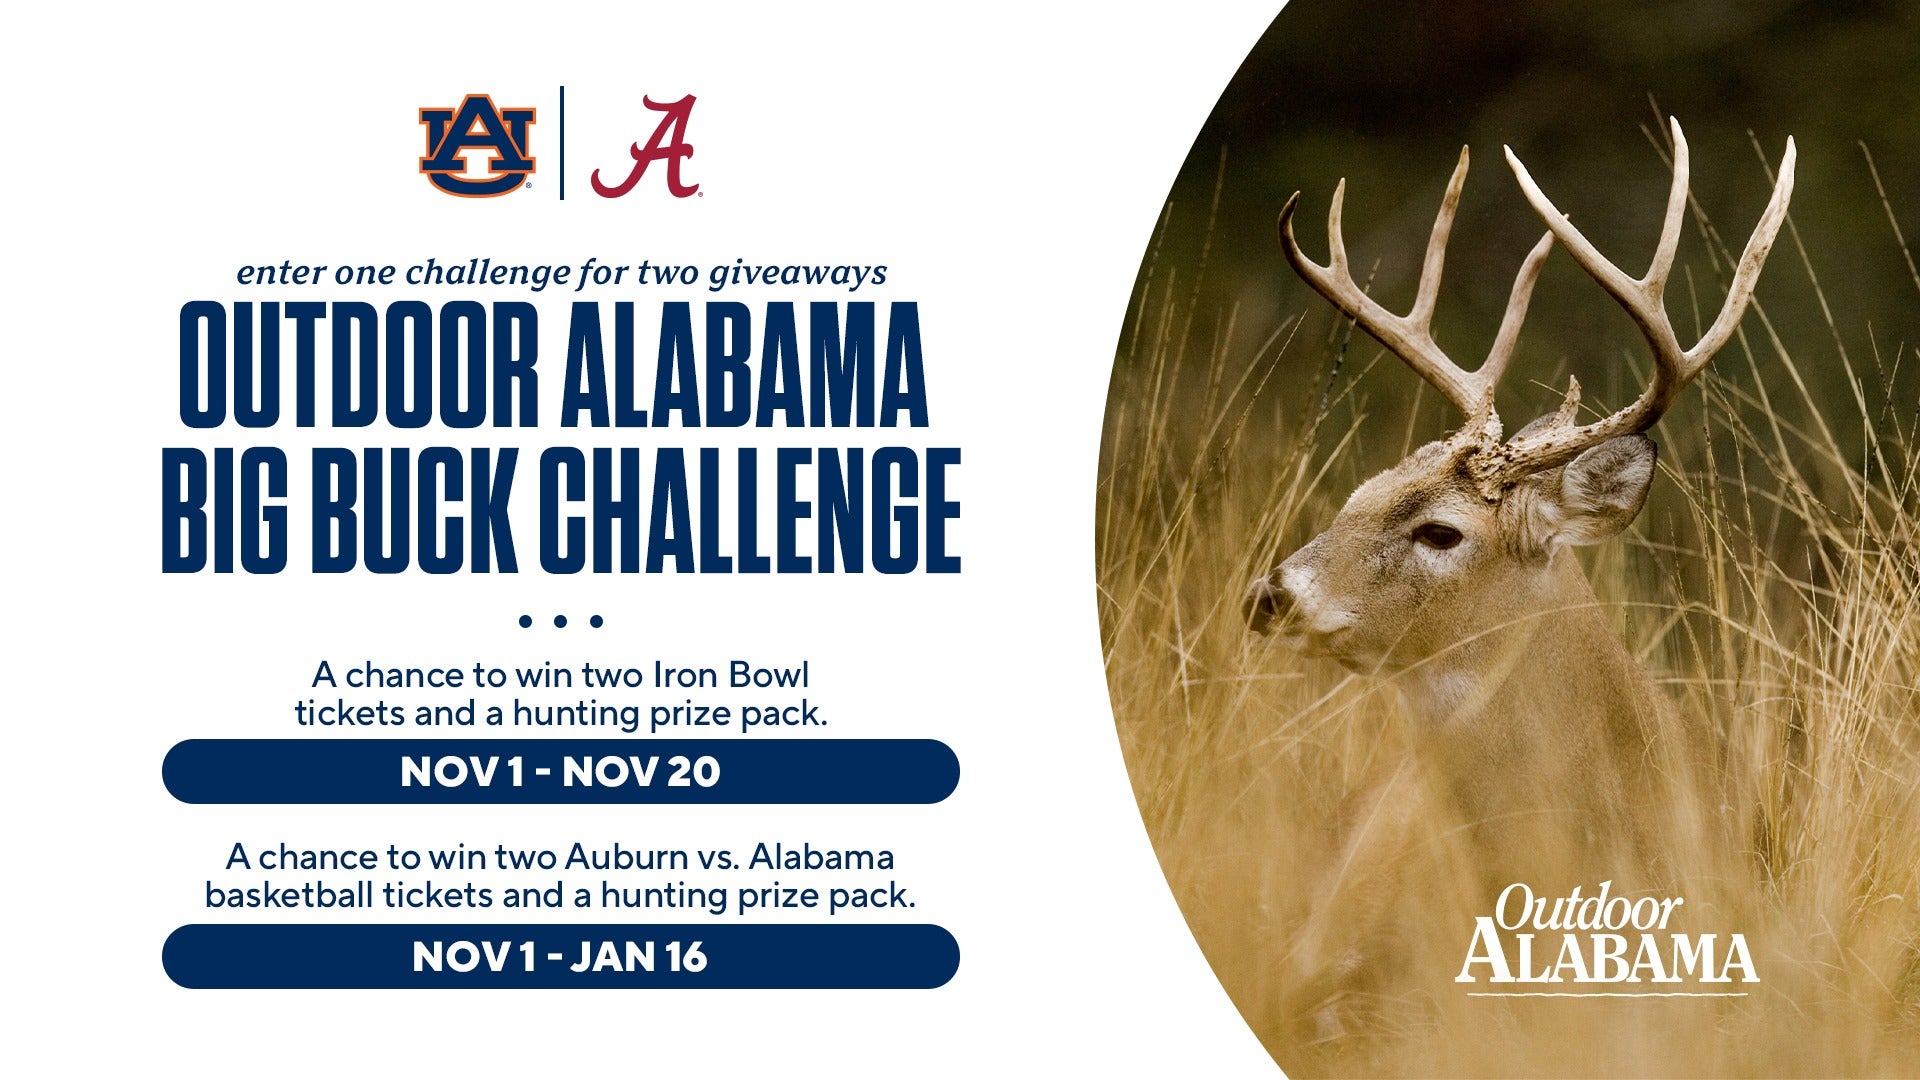 ADCNR Announces Outdoor Alabama Big Buck Challenge Photo Contest